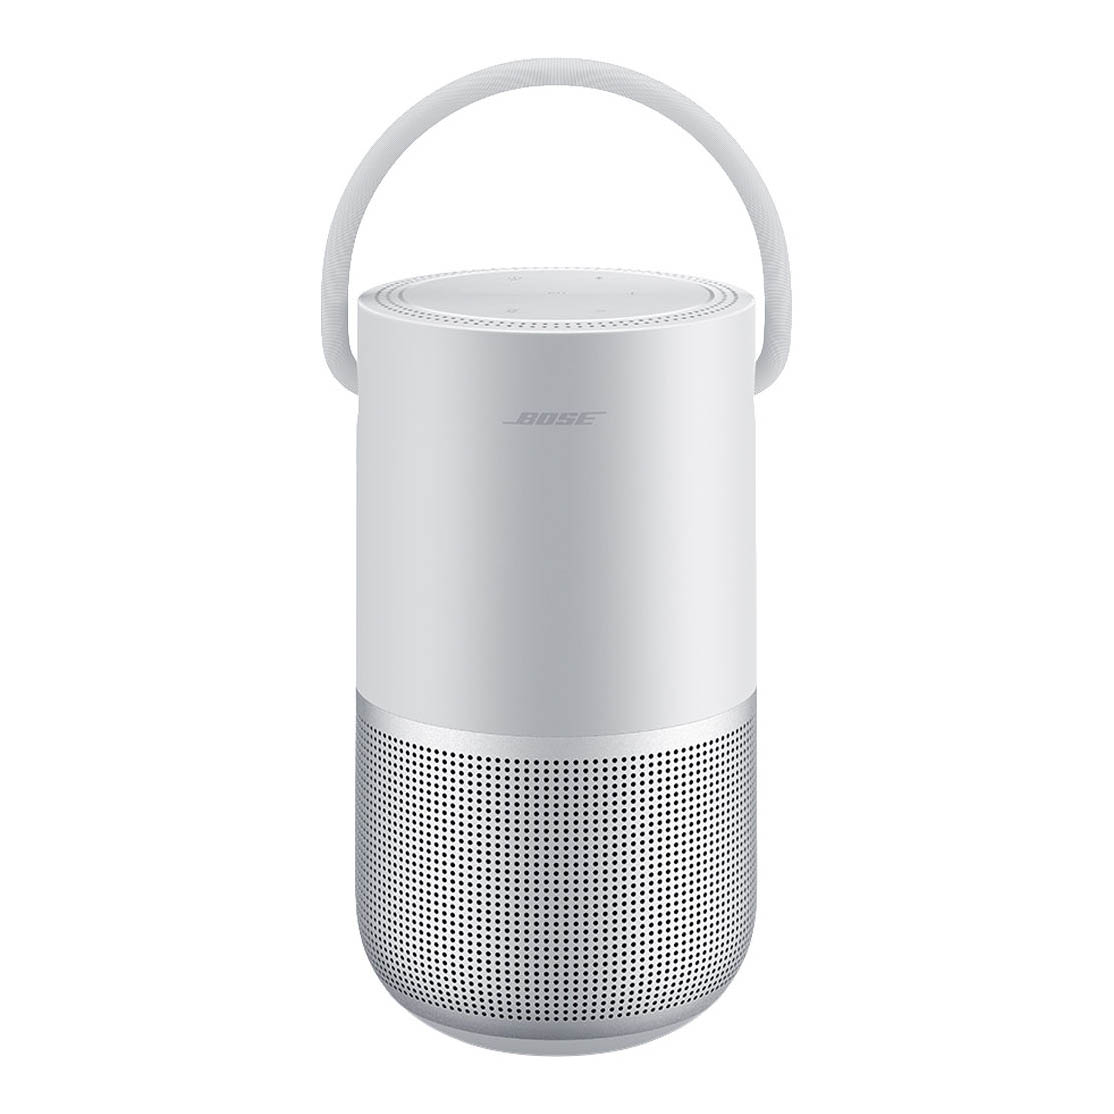 Умная колонка Bose Portable Home Speaker, серебристый shower speaker wireless portable bluetooth compatible speaker waterproof shower speaker hands free car portable speaker